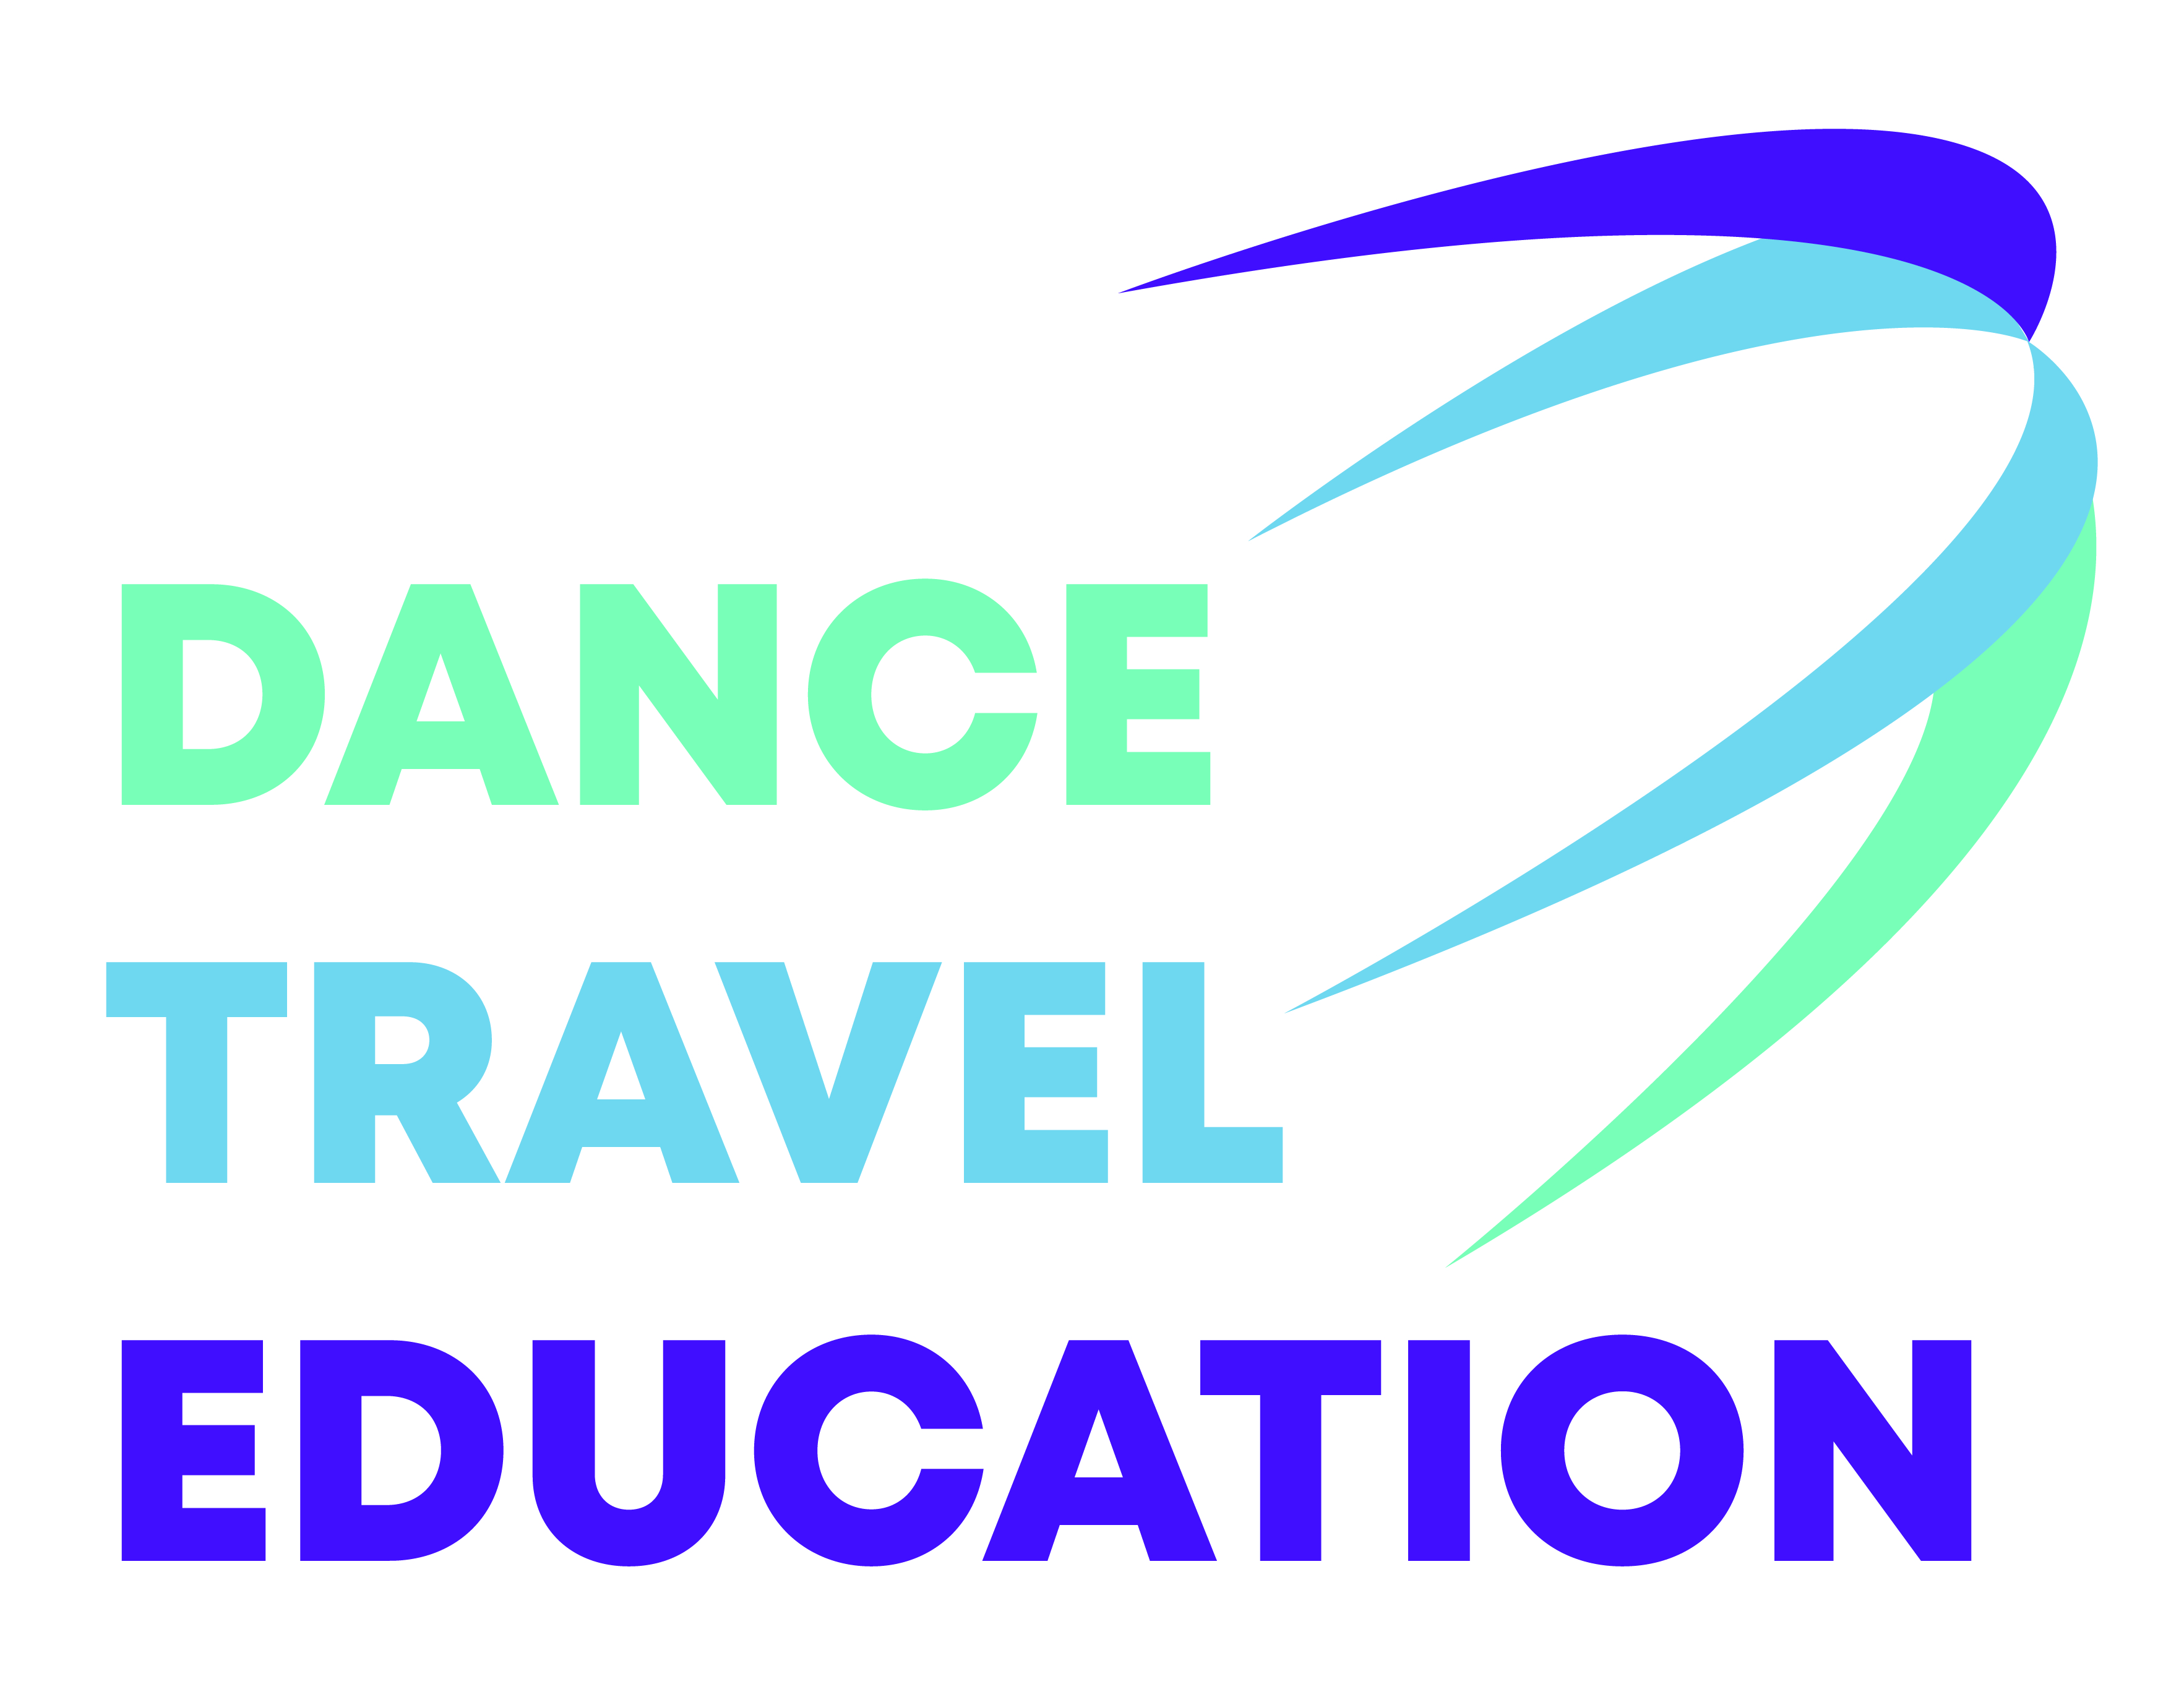 DANCE TRAVEL EDUCATION logo